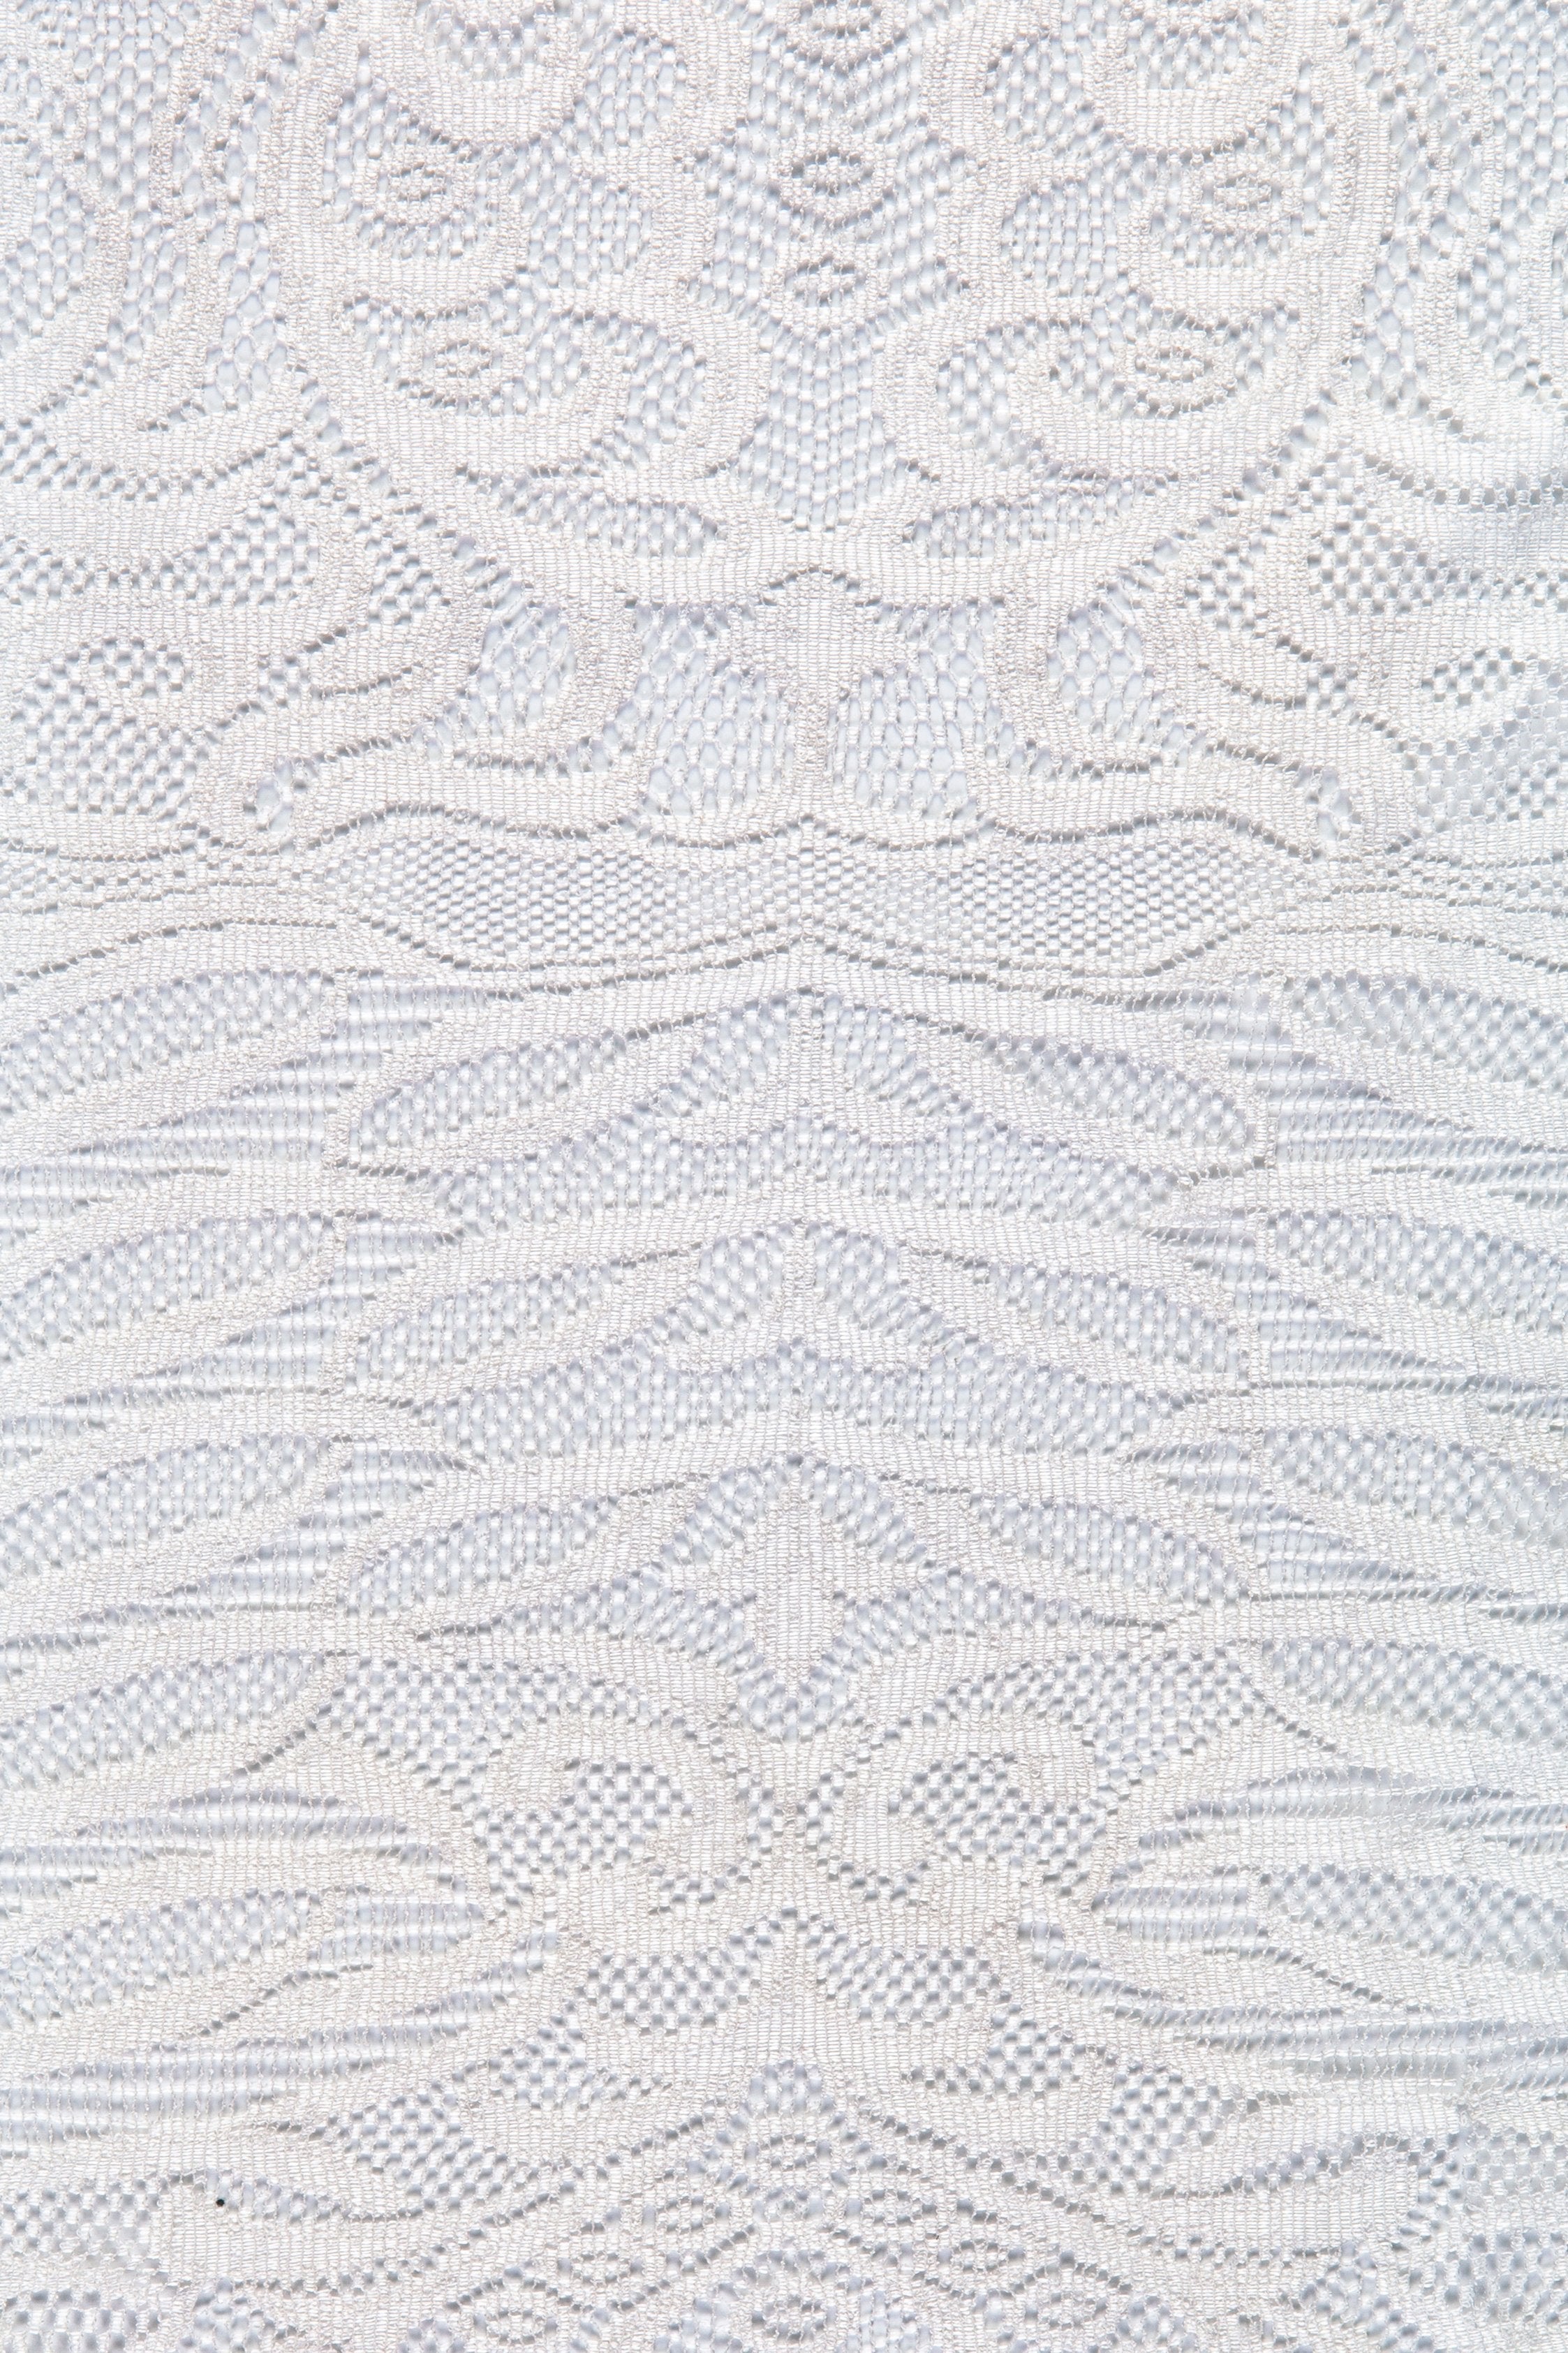 White Lace Fabric Wedding Dress Party Wear Design | Burç Fabric